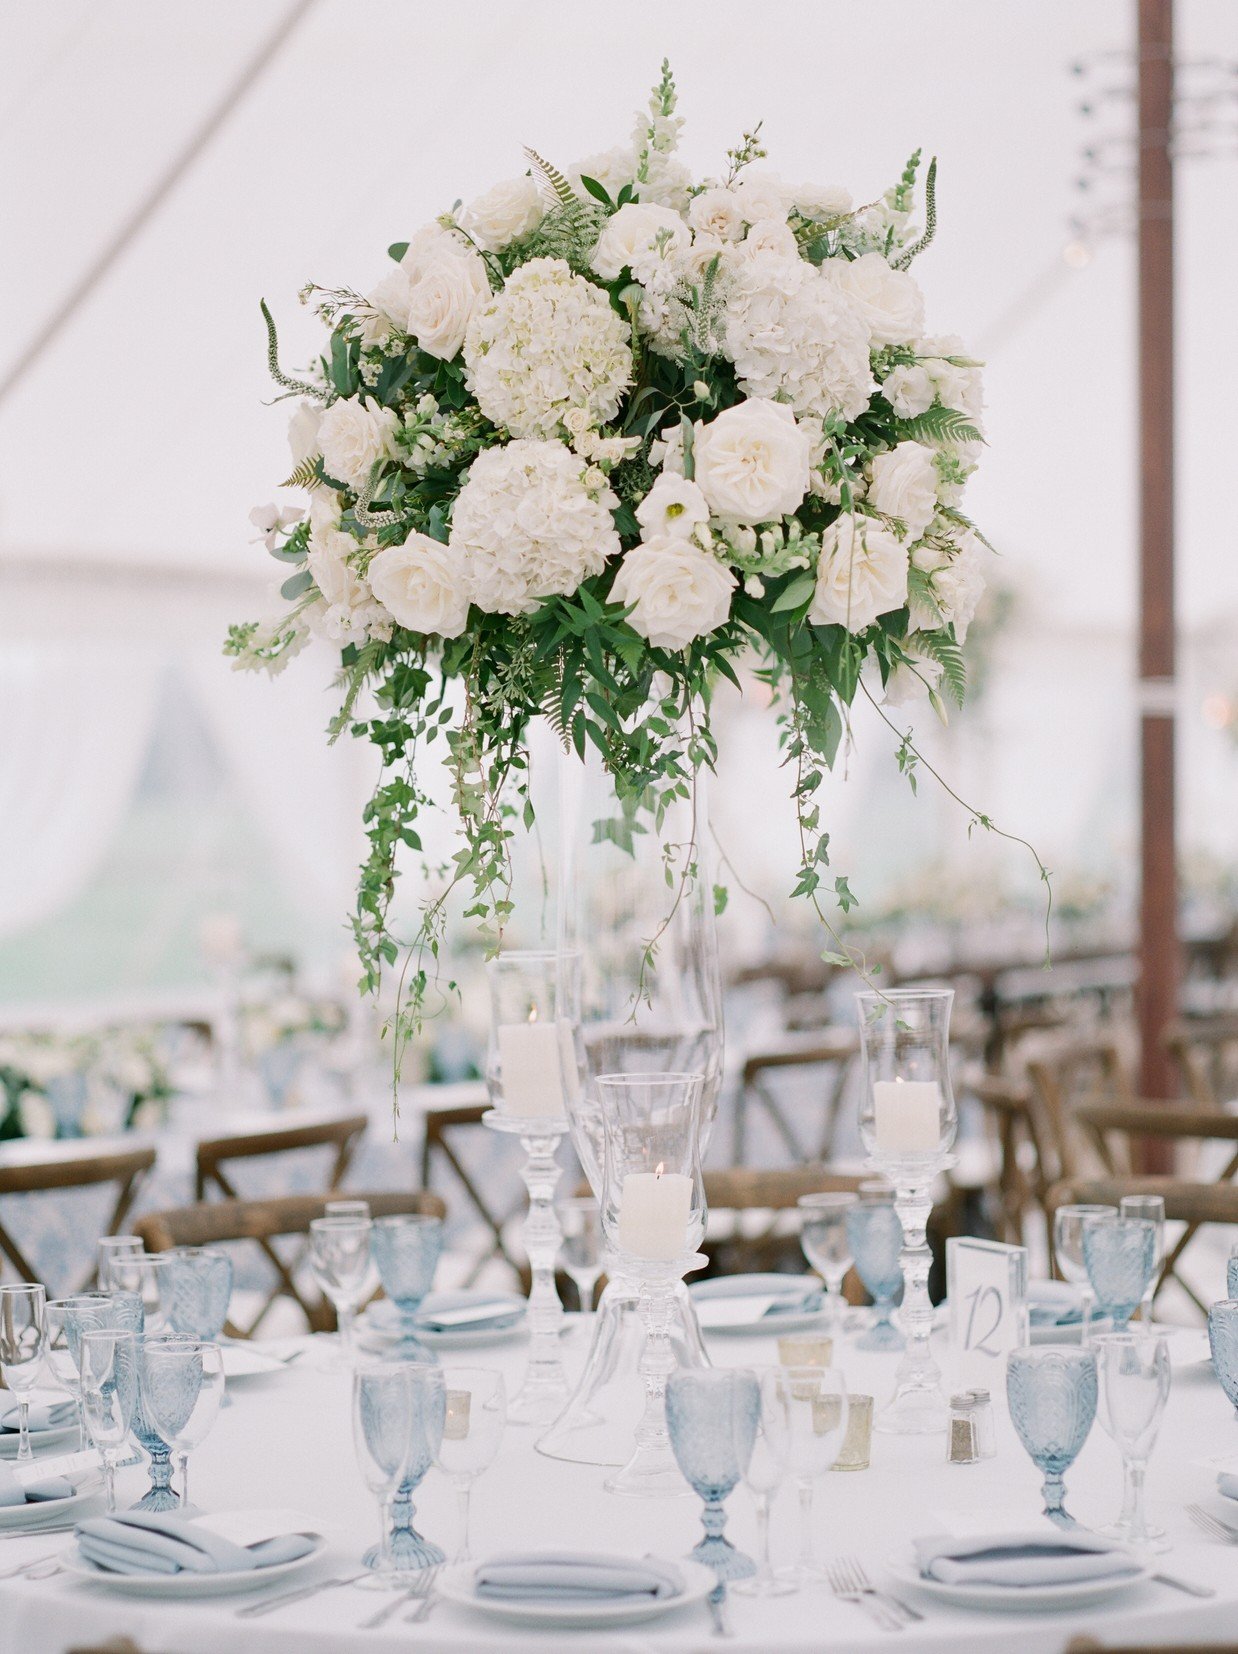 Mini White Lantern - Beach Wedding Reception Table Decoration - Rustic  Country Barn Party - MW37039